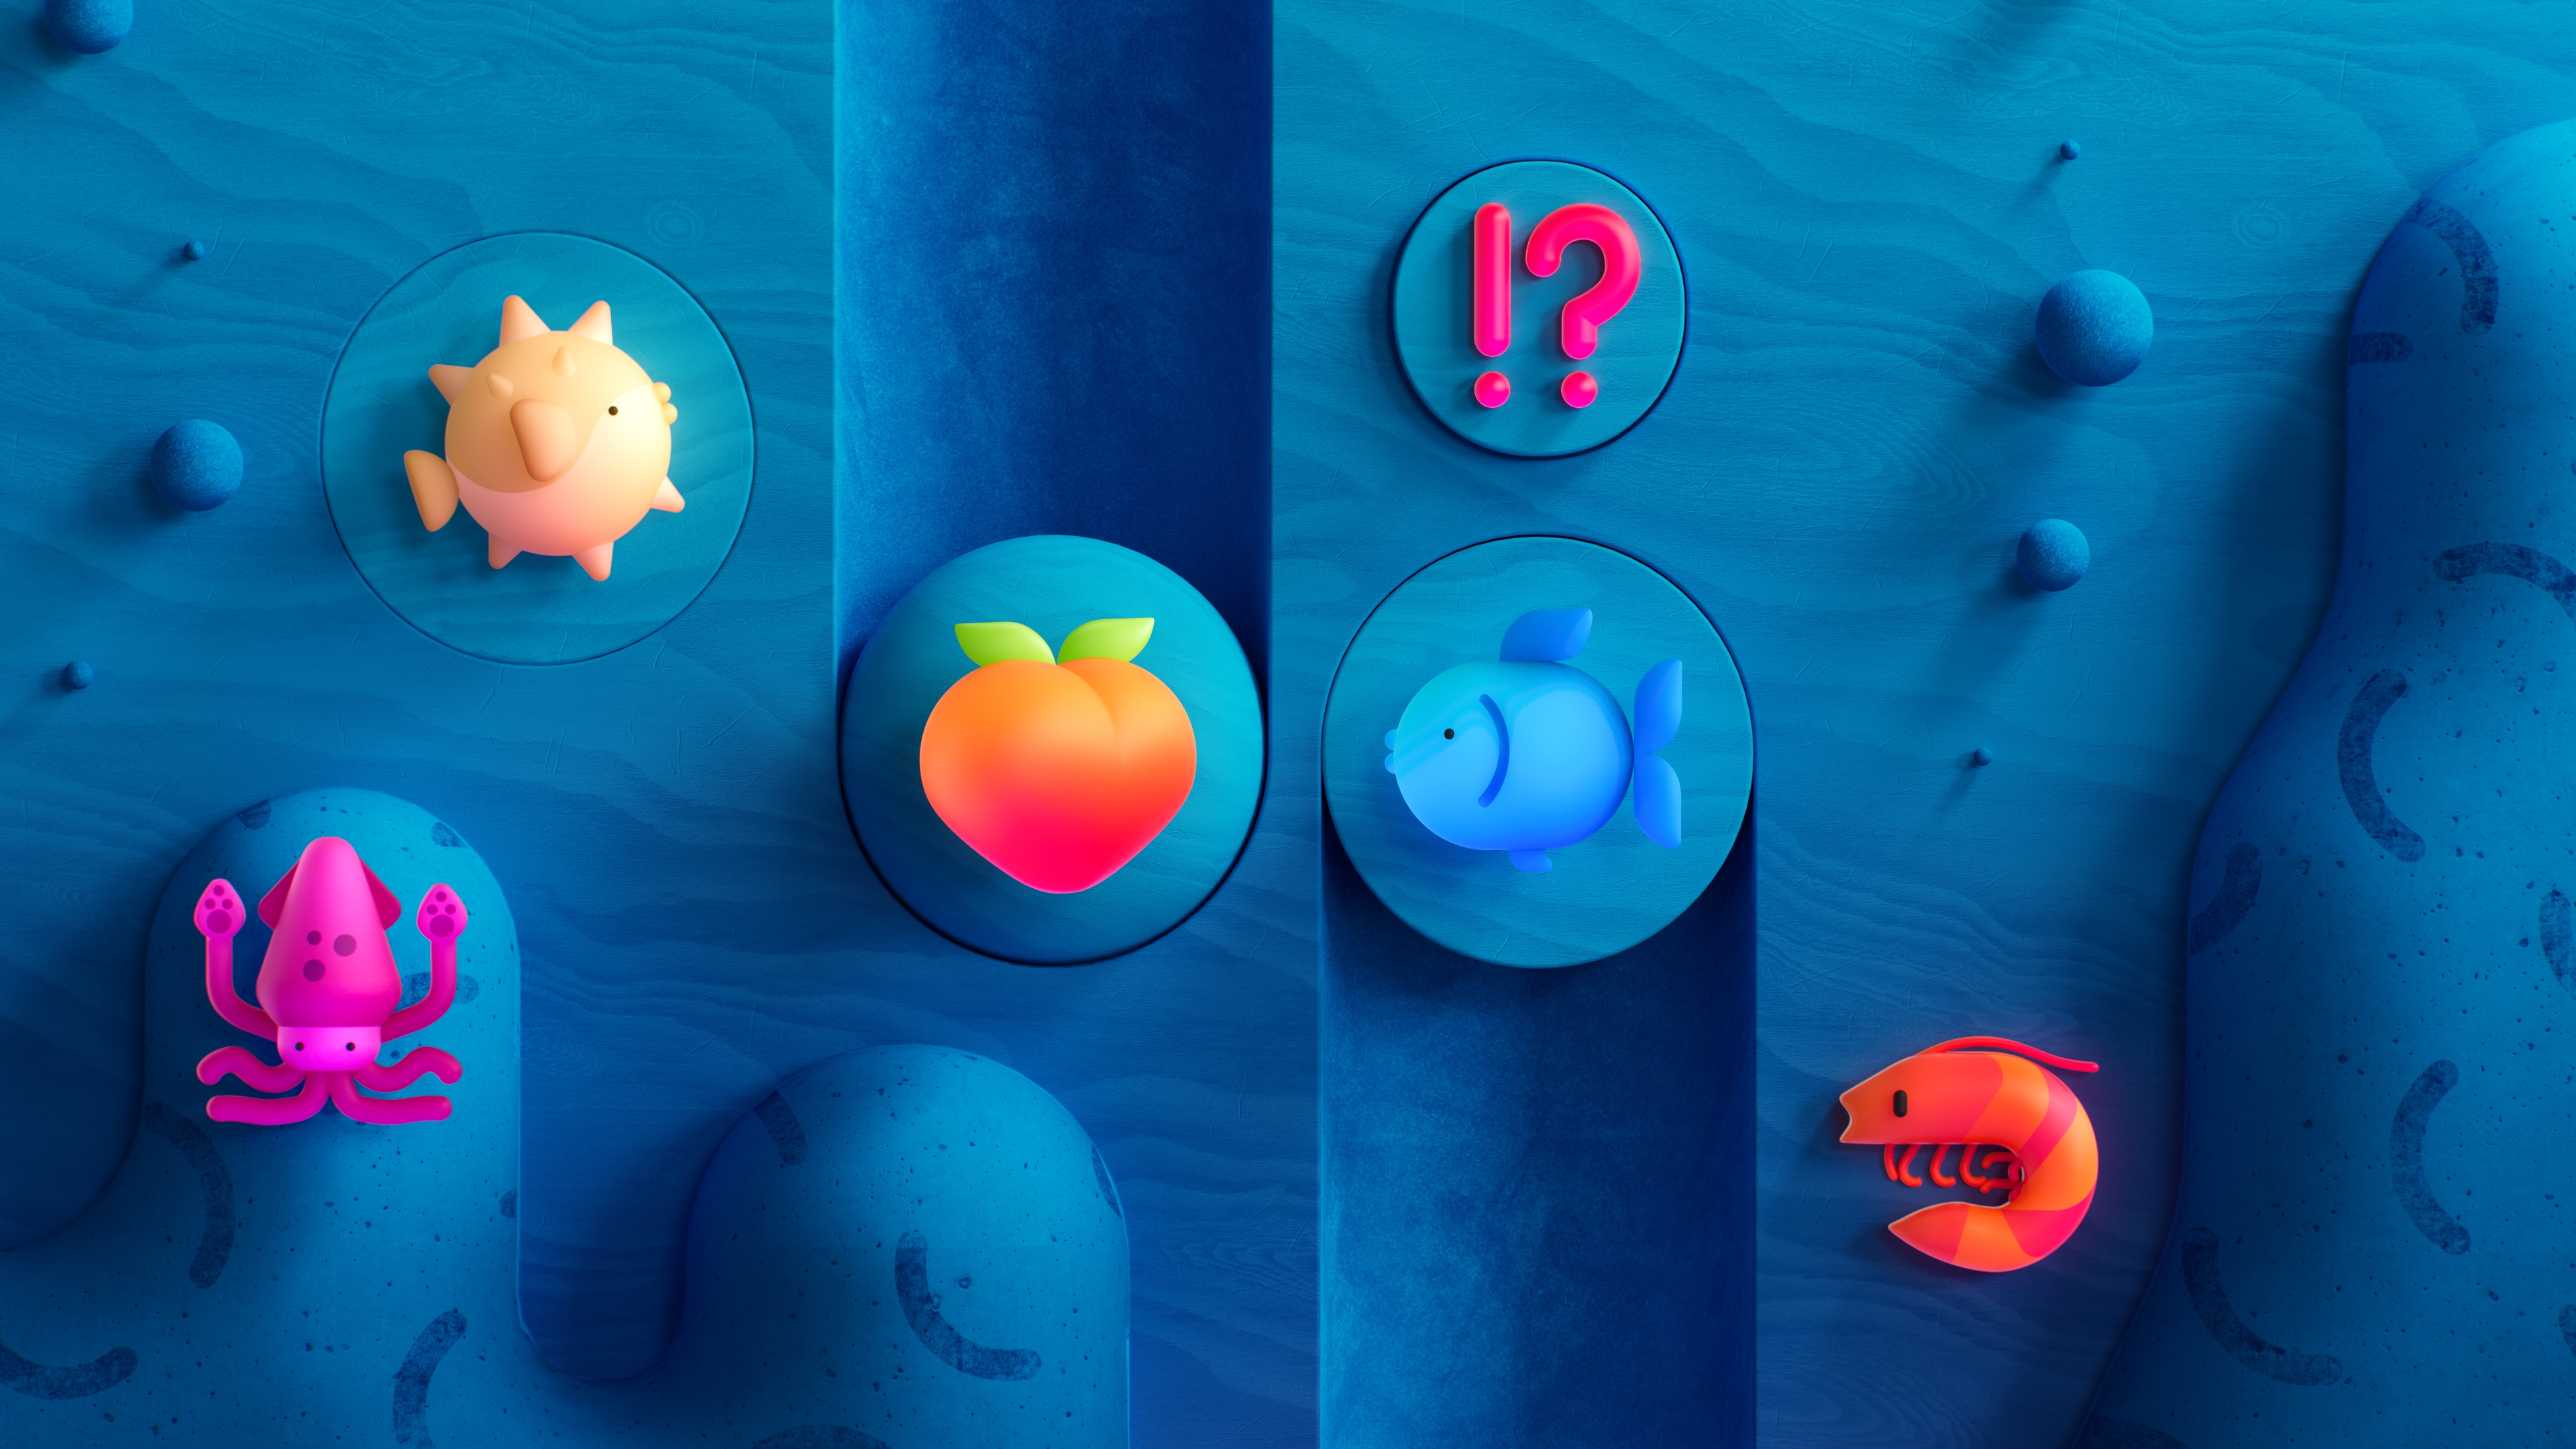 HD wallpaper, Emoticons, Blue Background, Emoji